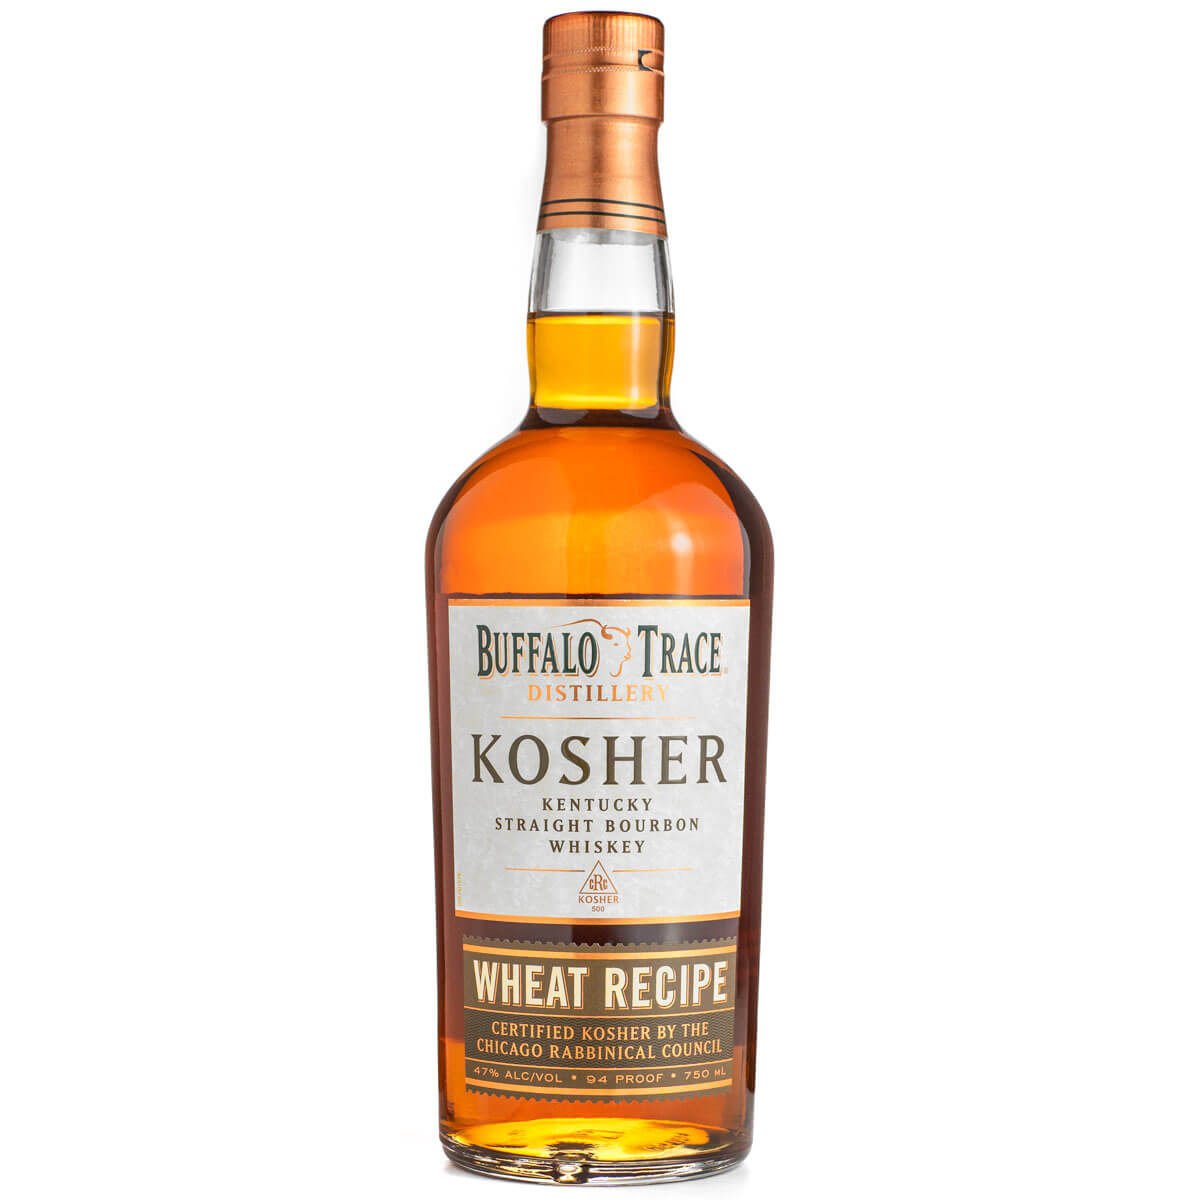 Buffalo Trace Kosher Wheat Recipe Bourbon bottle